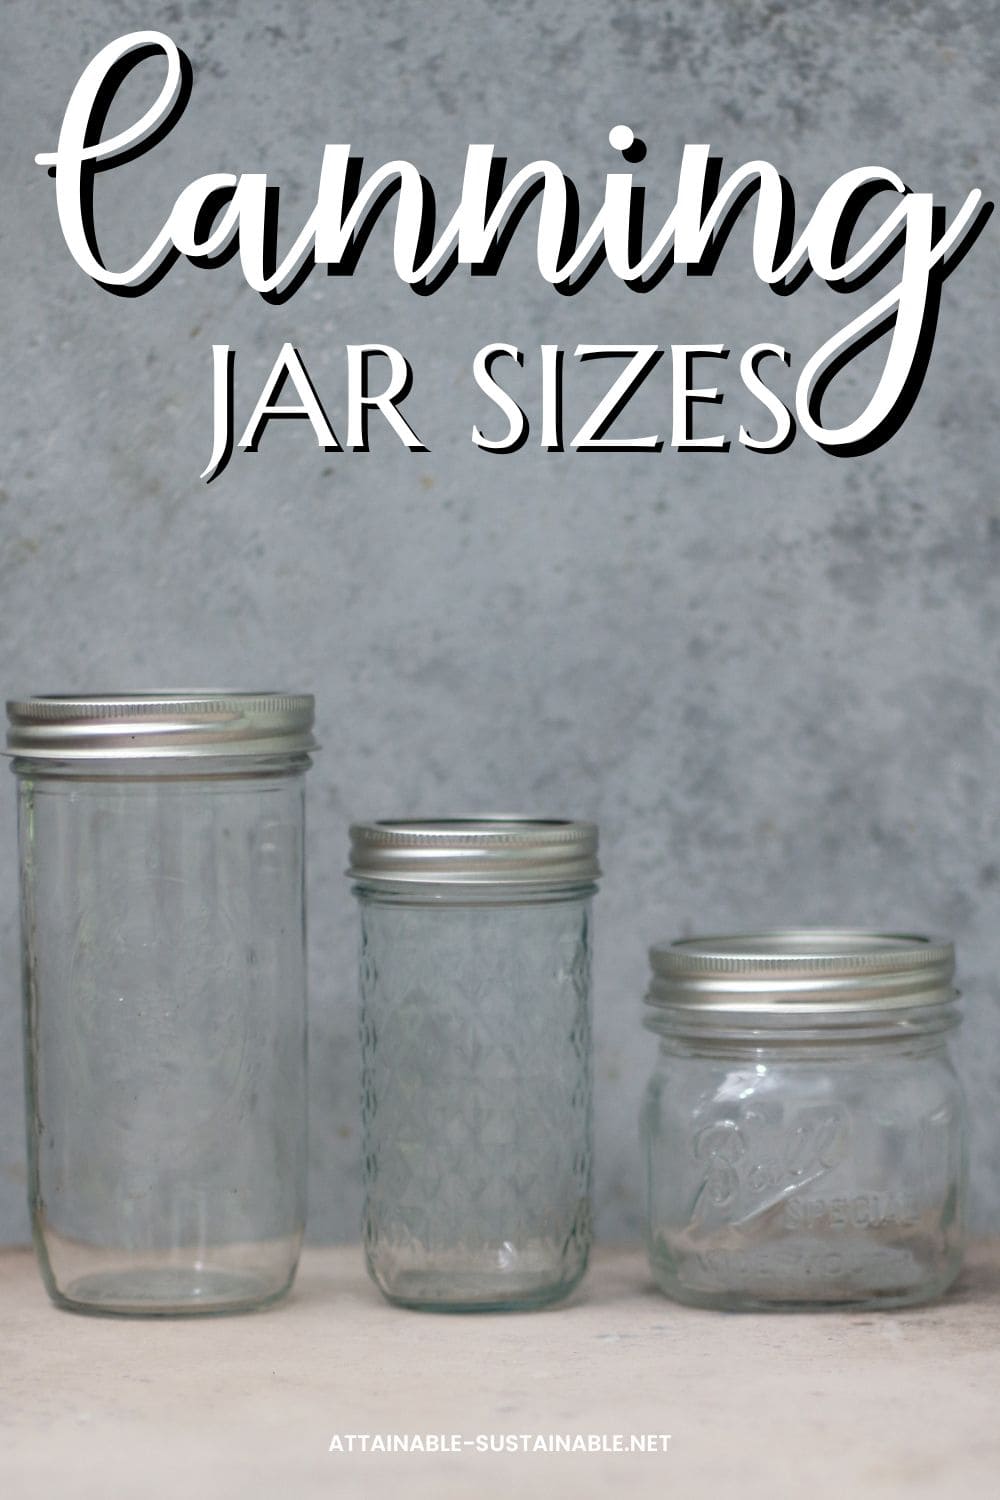 3 empty canning jars